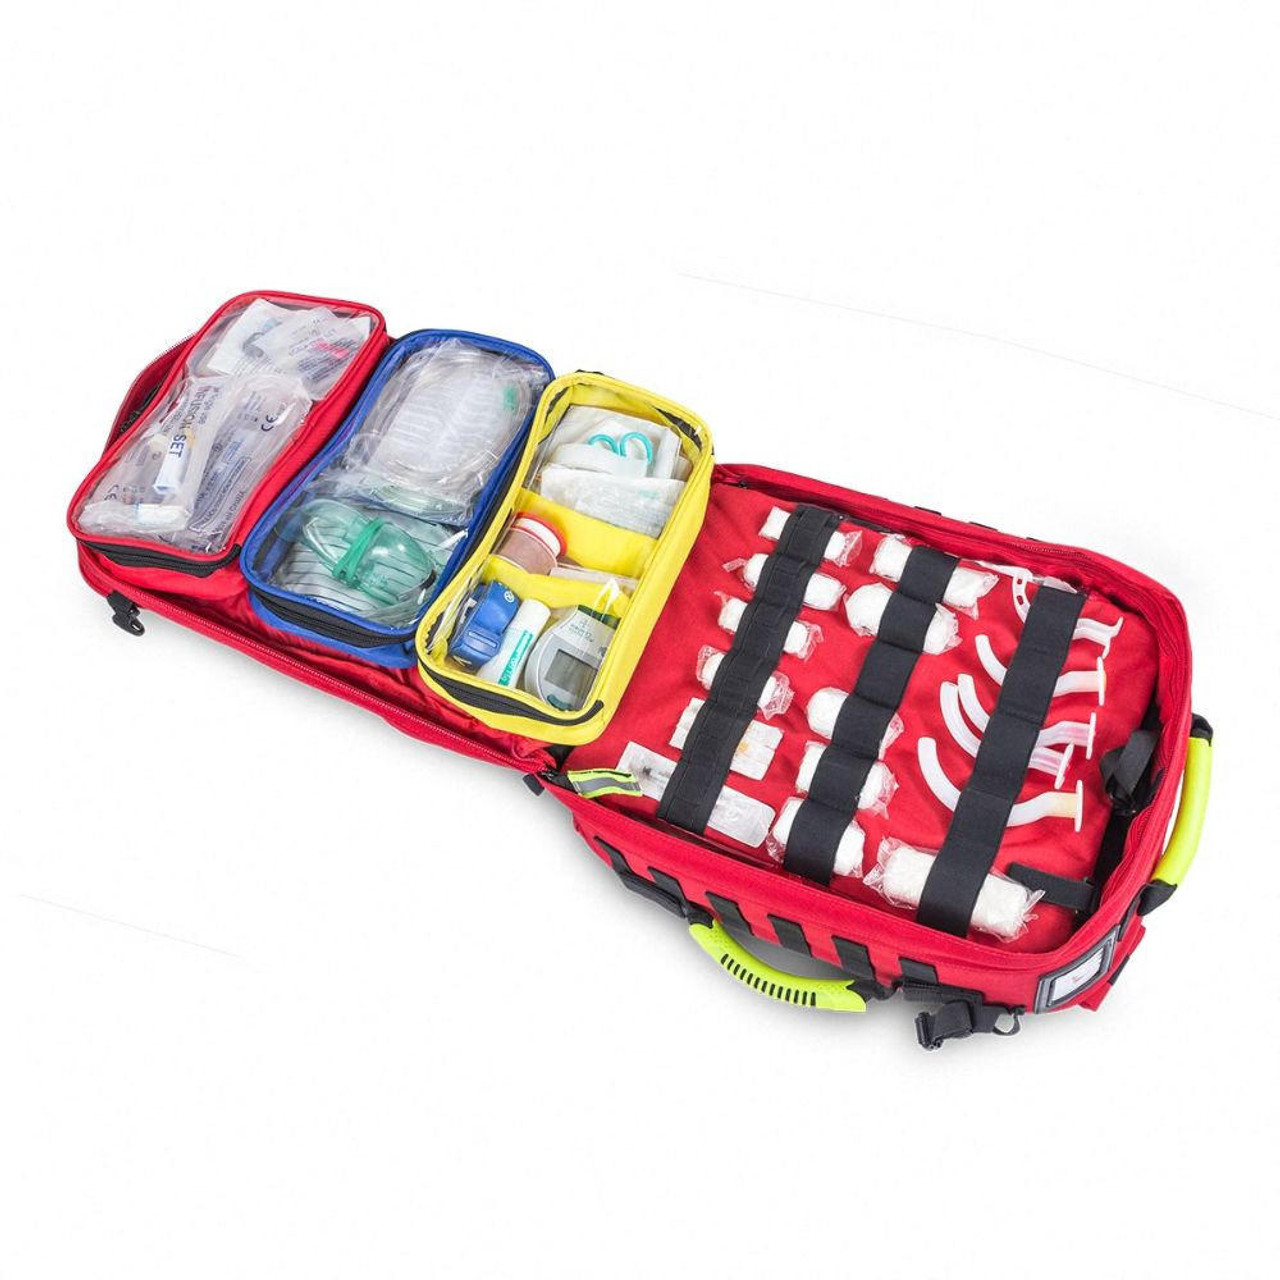  Large Medical Backpack for Emergency Response Red 32 Litre 